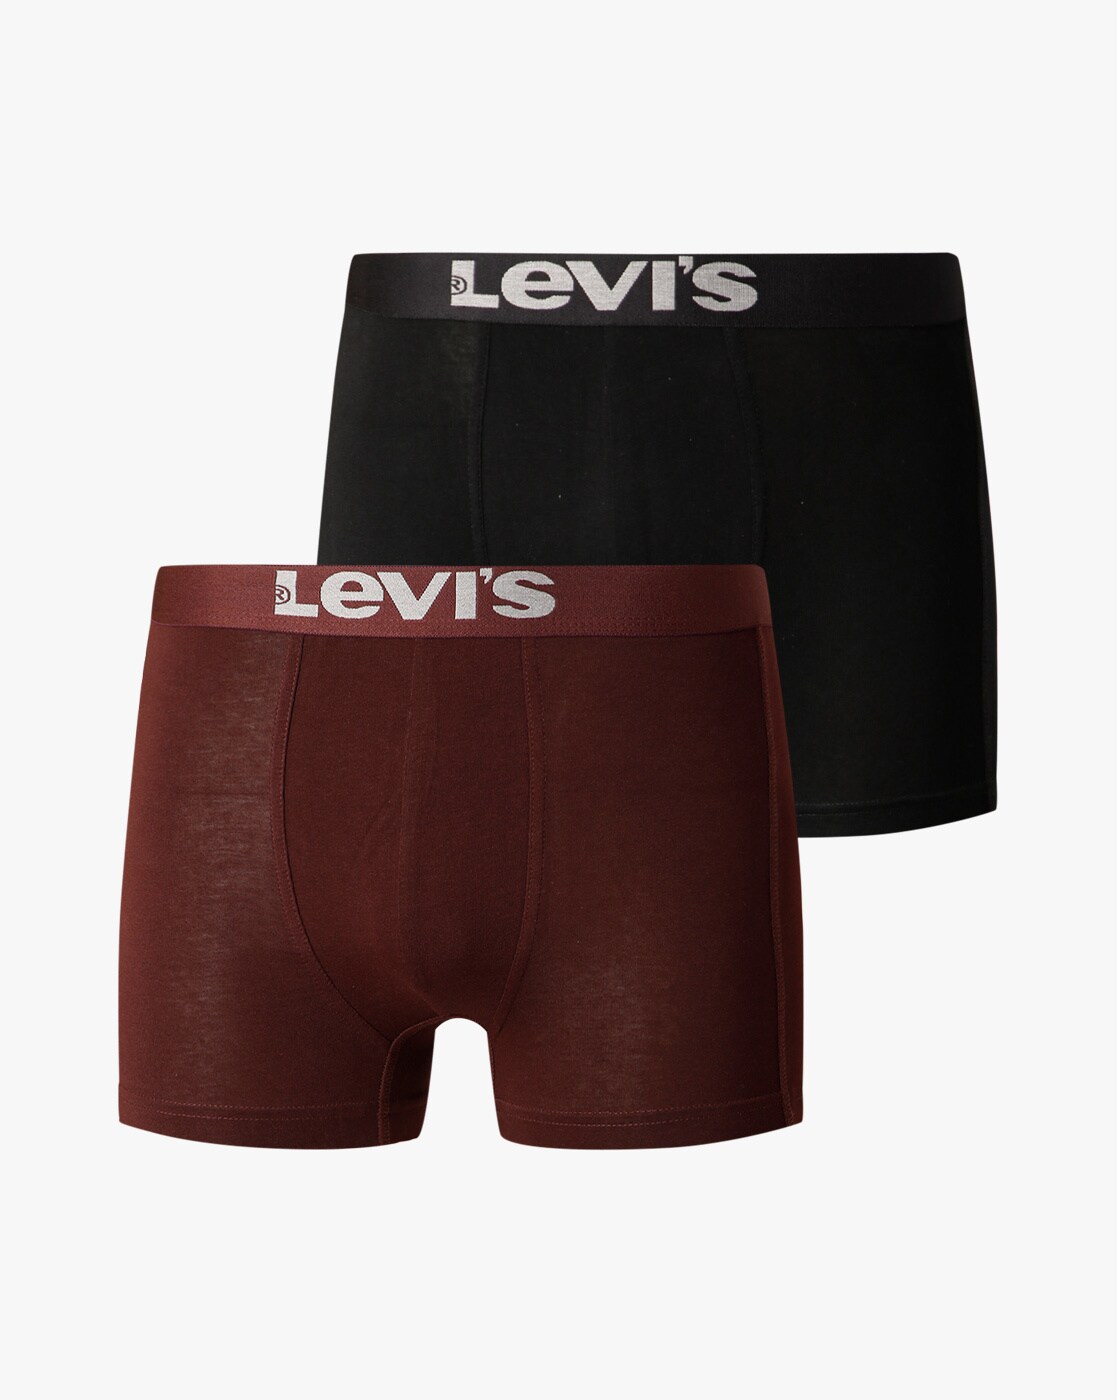 Buy Multicoloured Briefs for Men by LEVIS Online